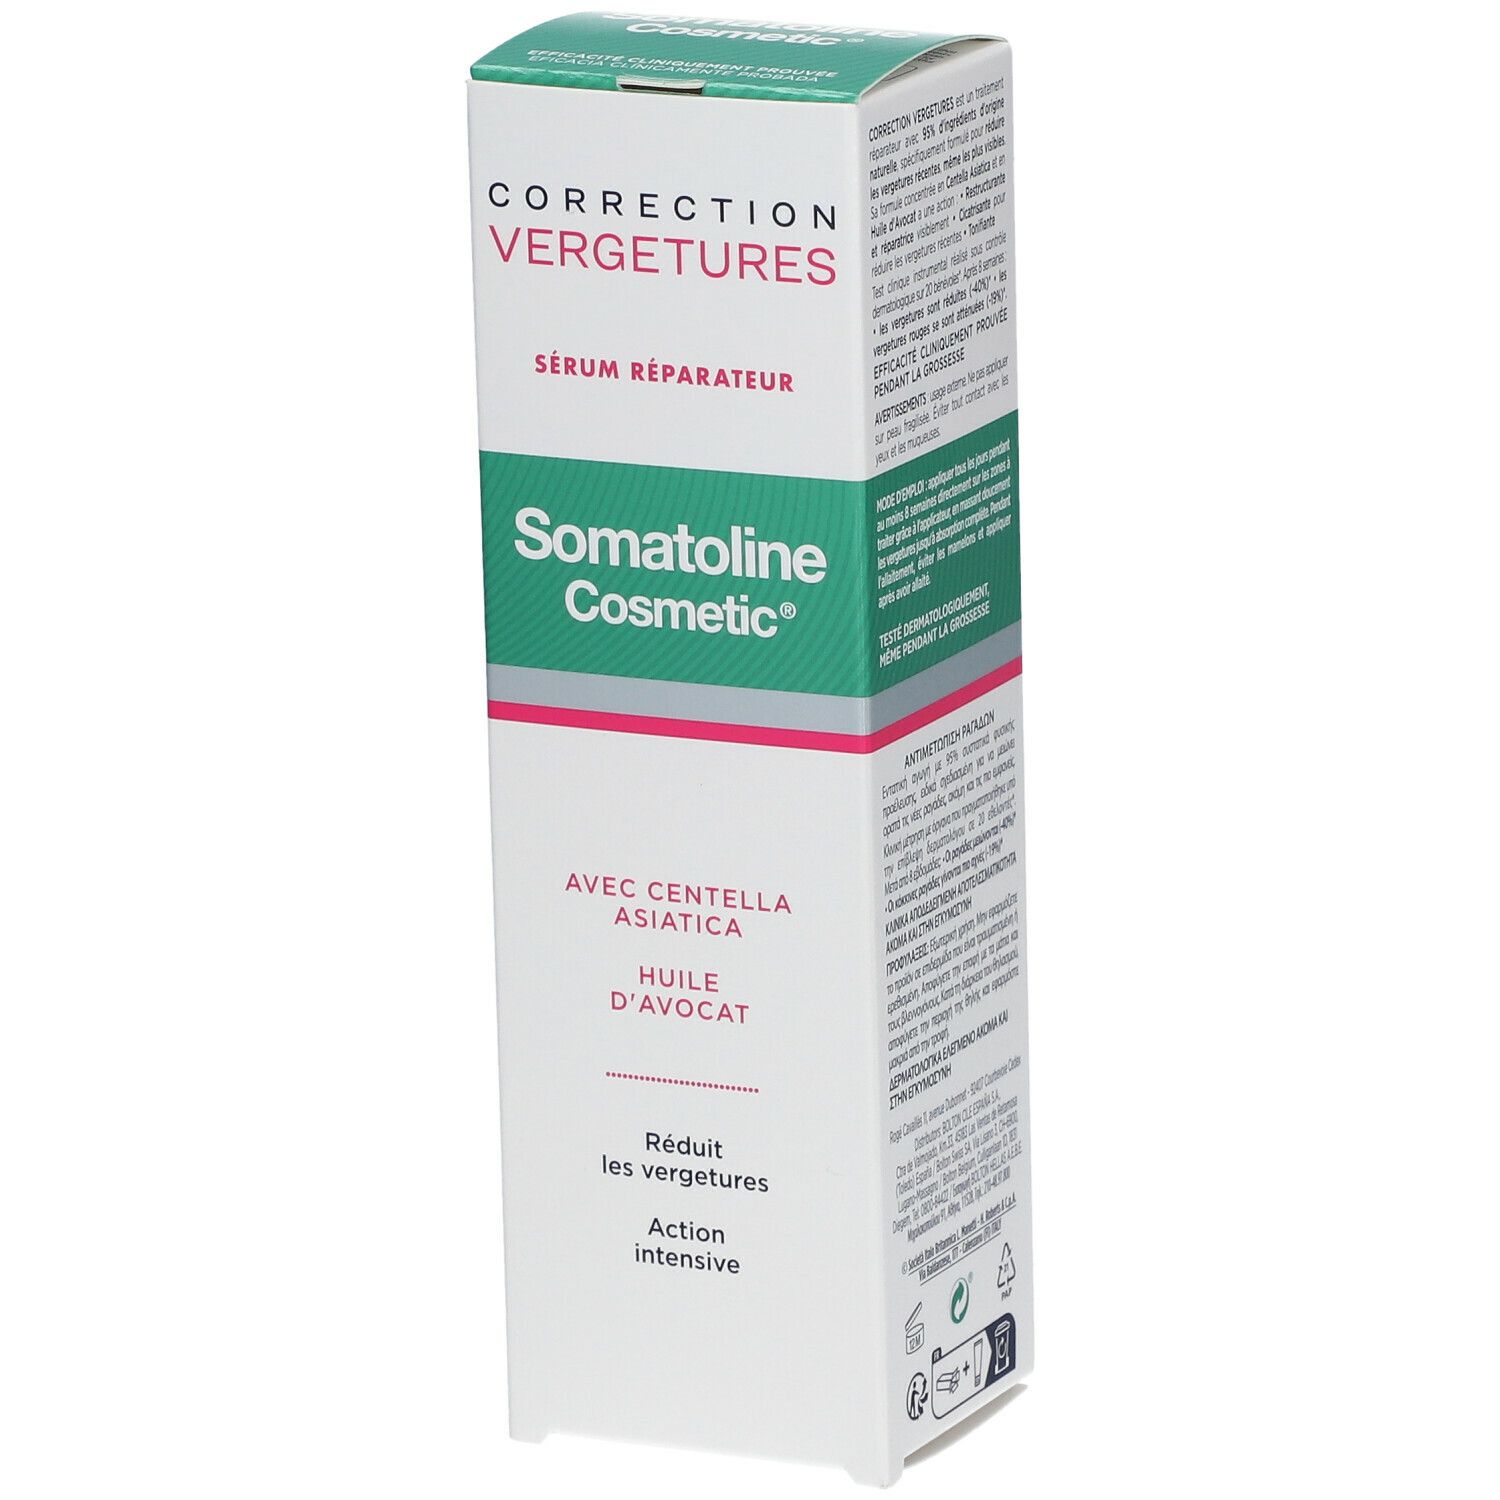 Somatoline Cosmetic® Correction Vergetures Sérum Répatateur